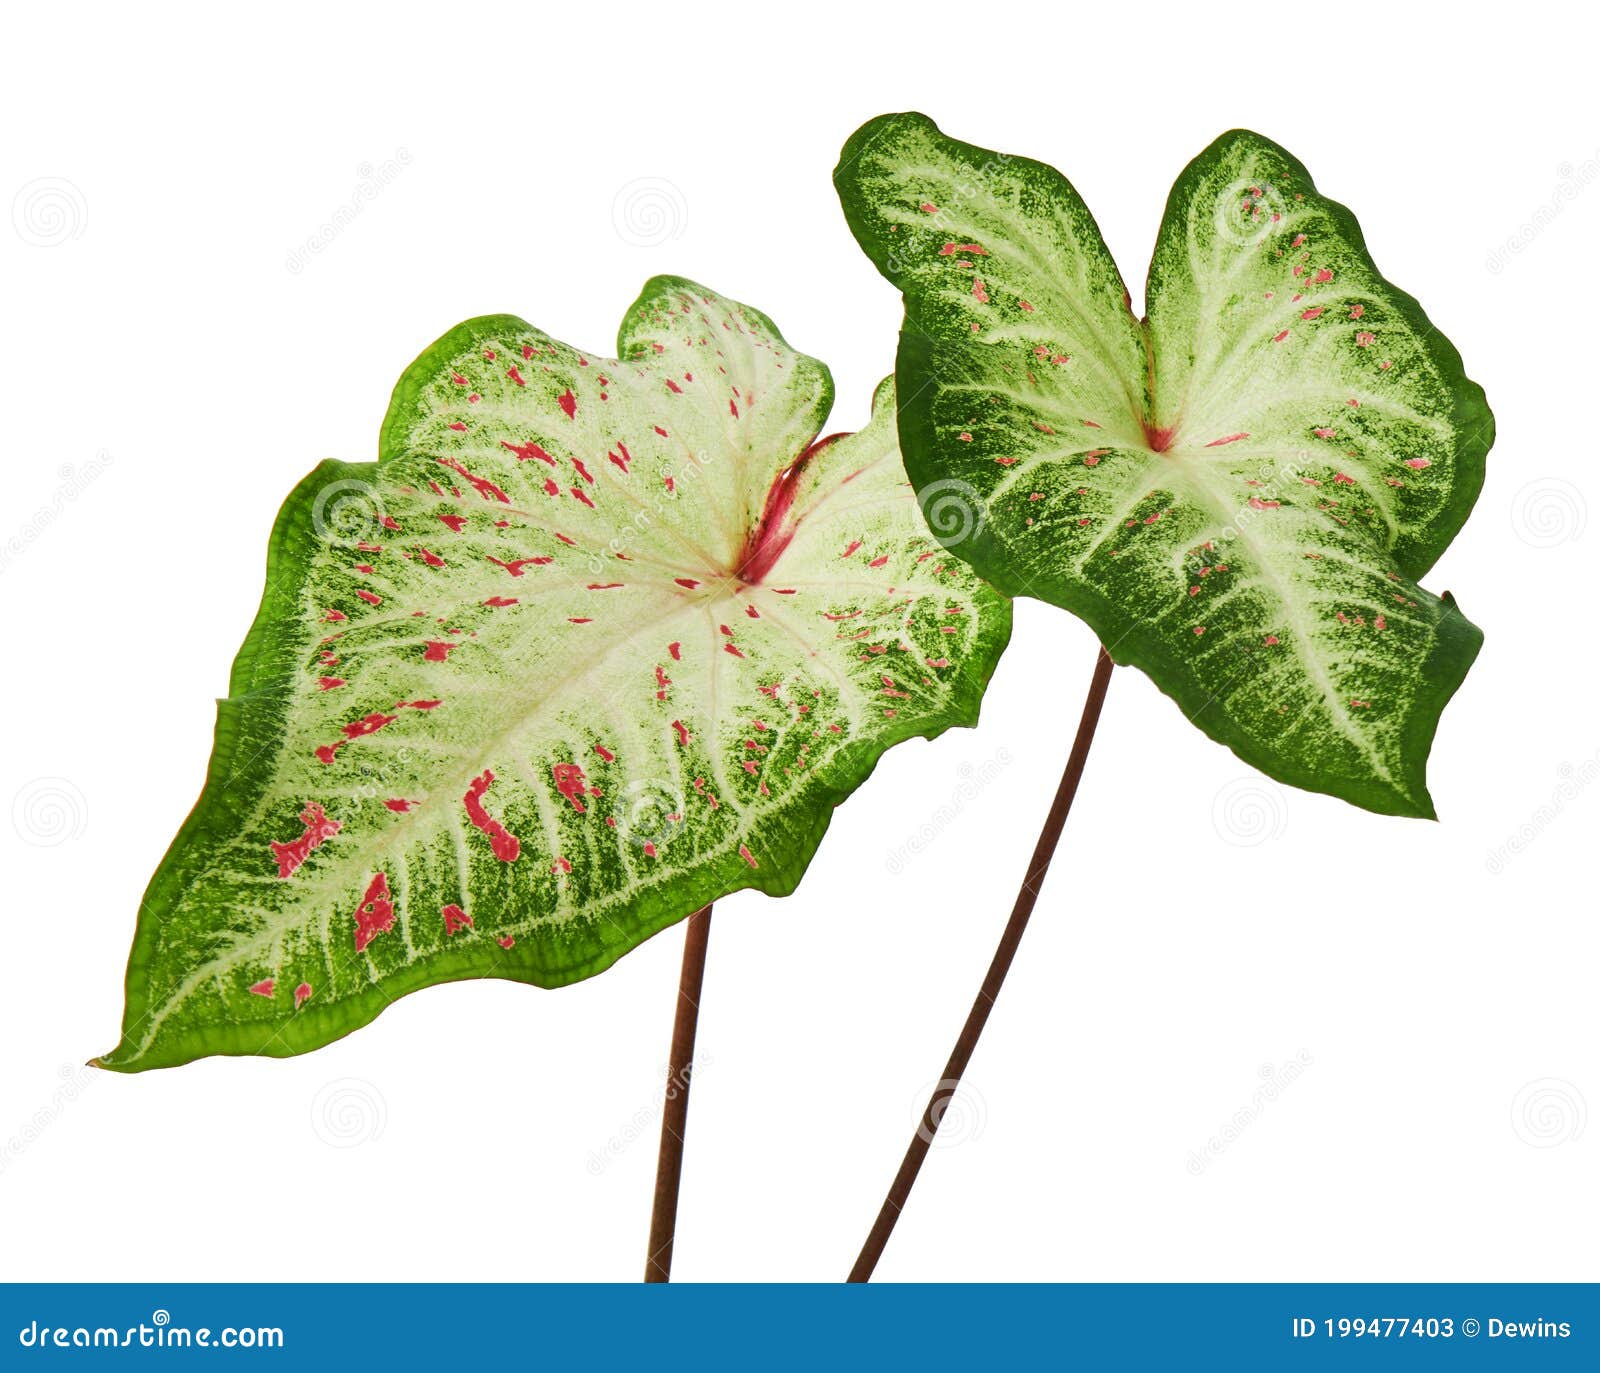 Caladium Bicolor with White Leaf and Green Veins Gingerland Caladium ...